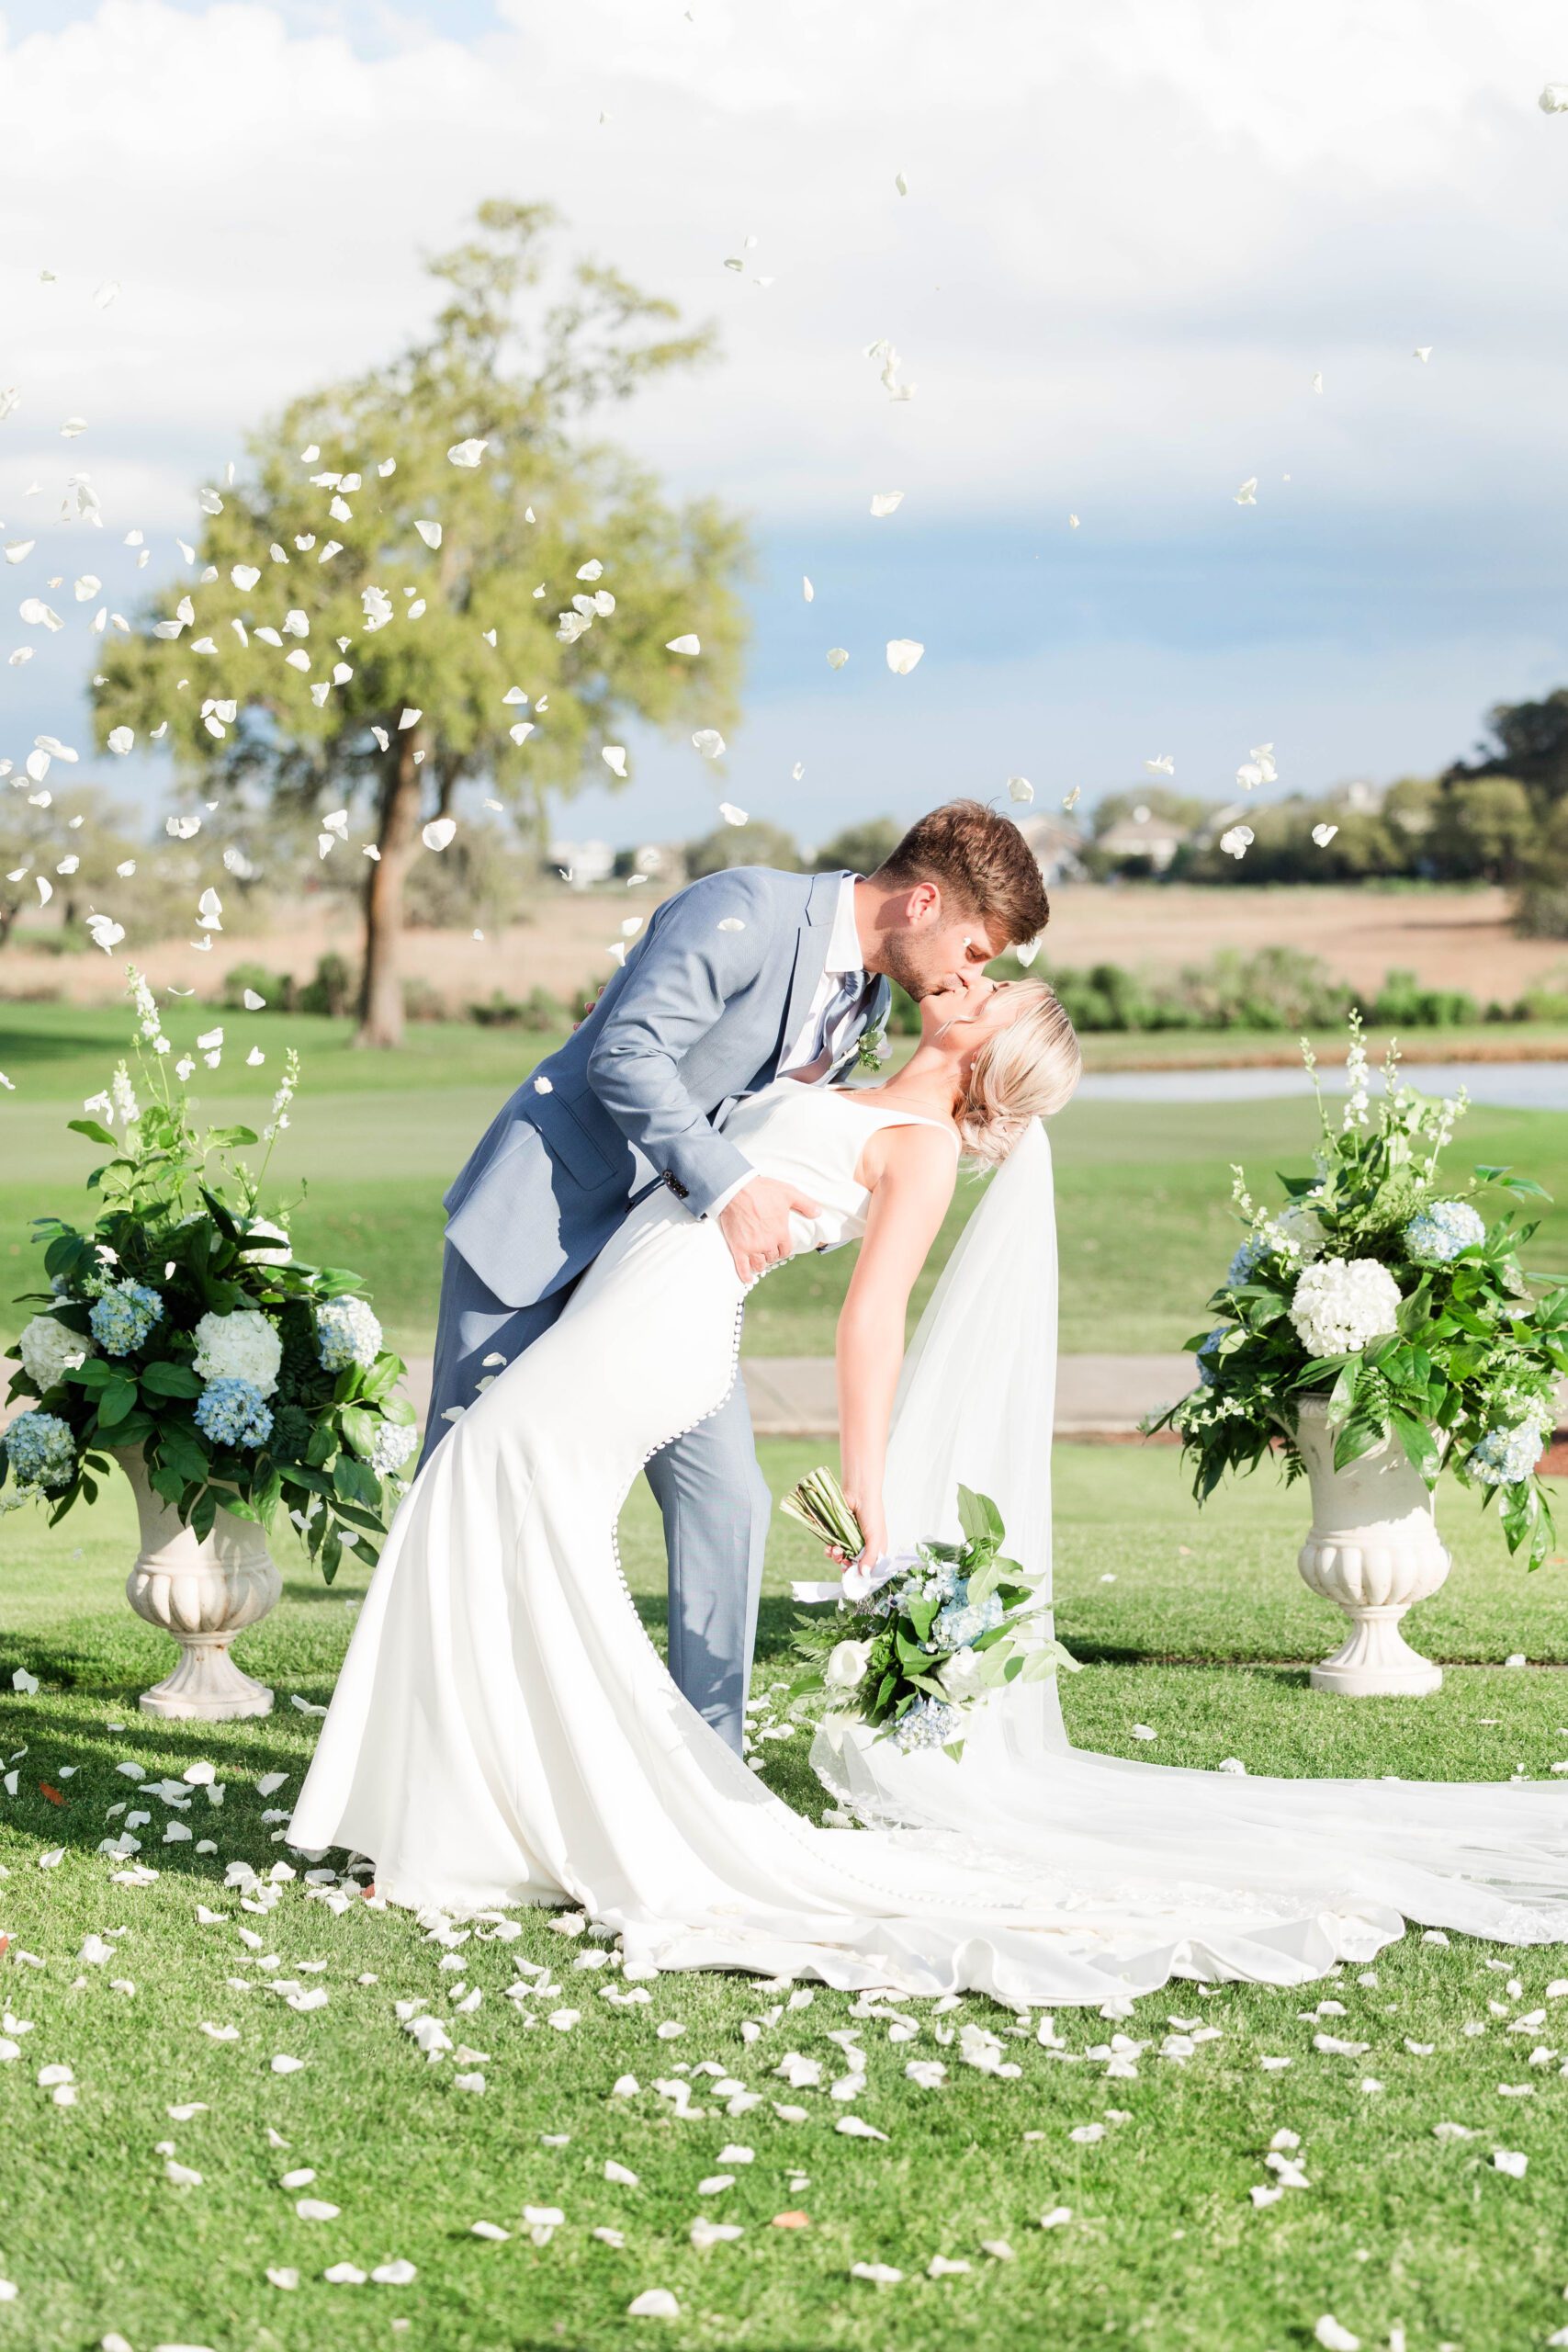 Flower Pedals Kiss Wedding Day